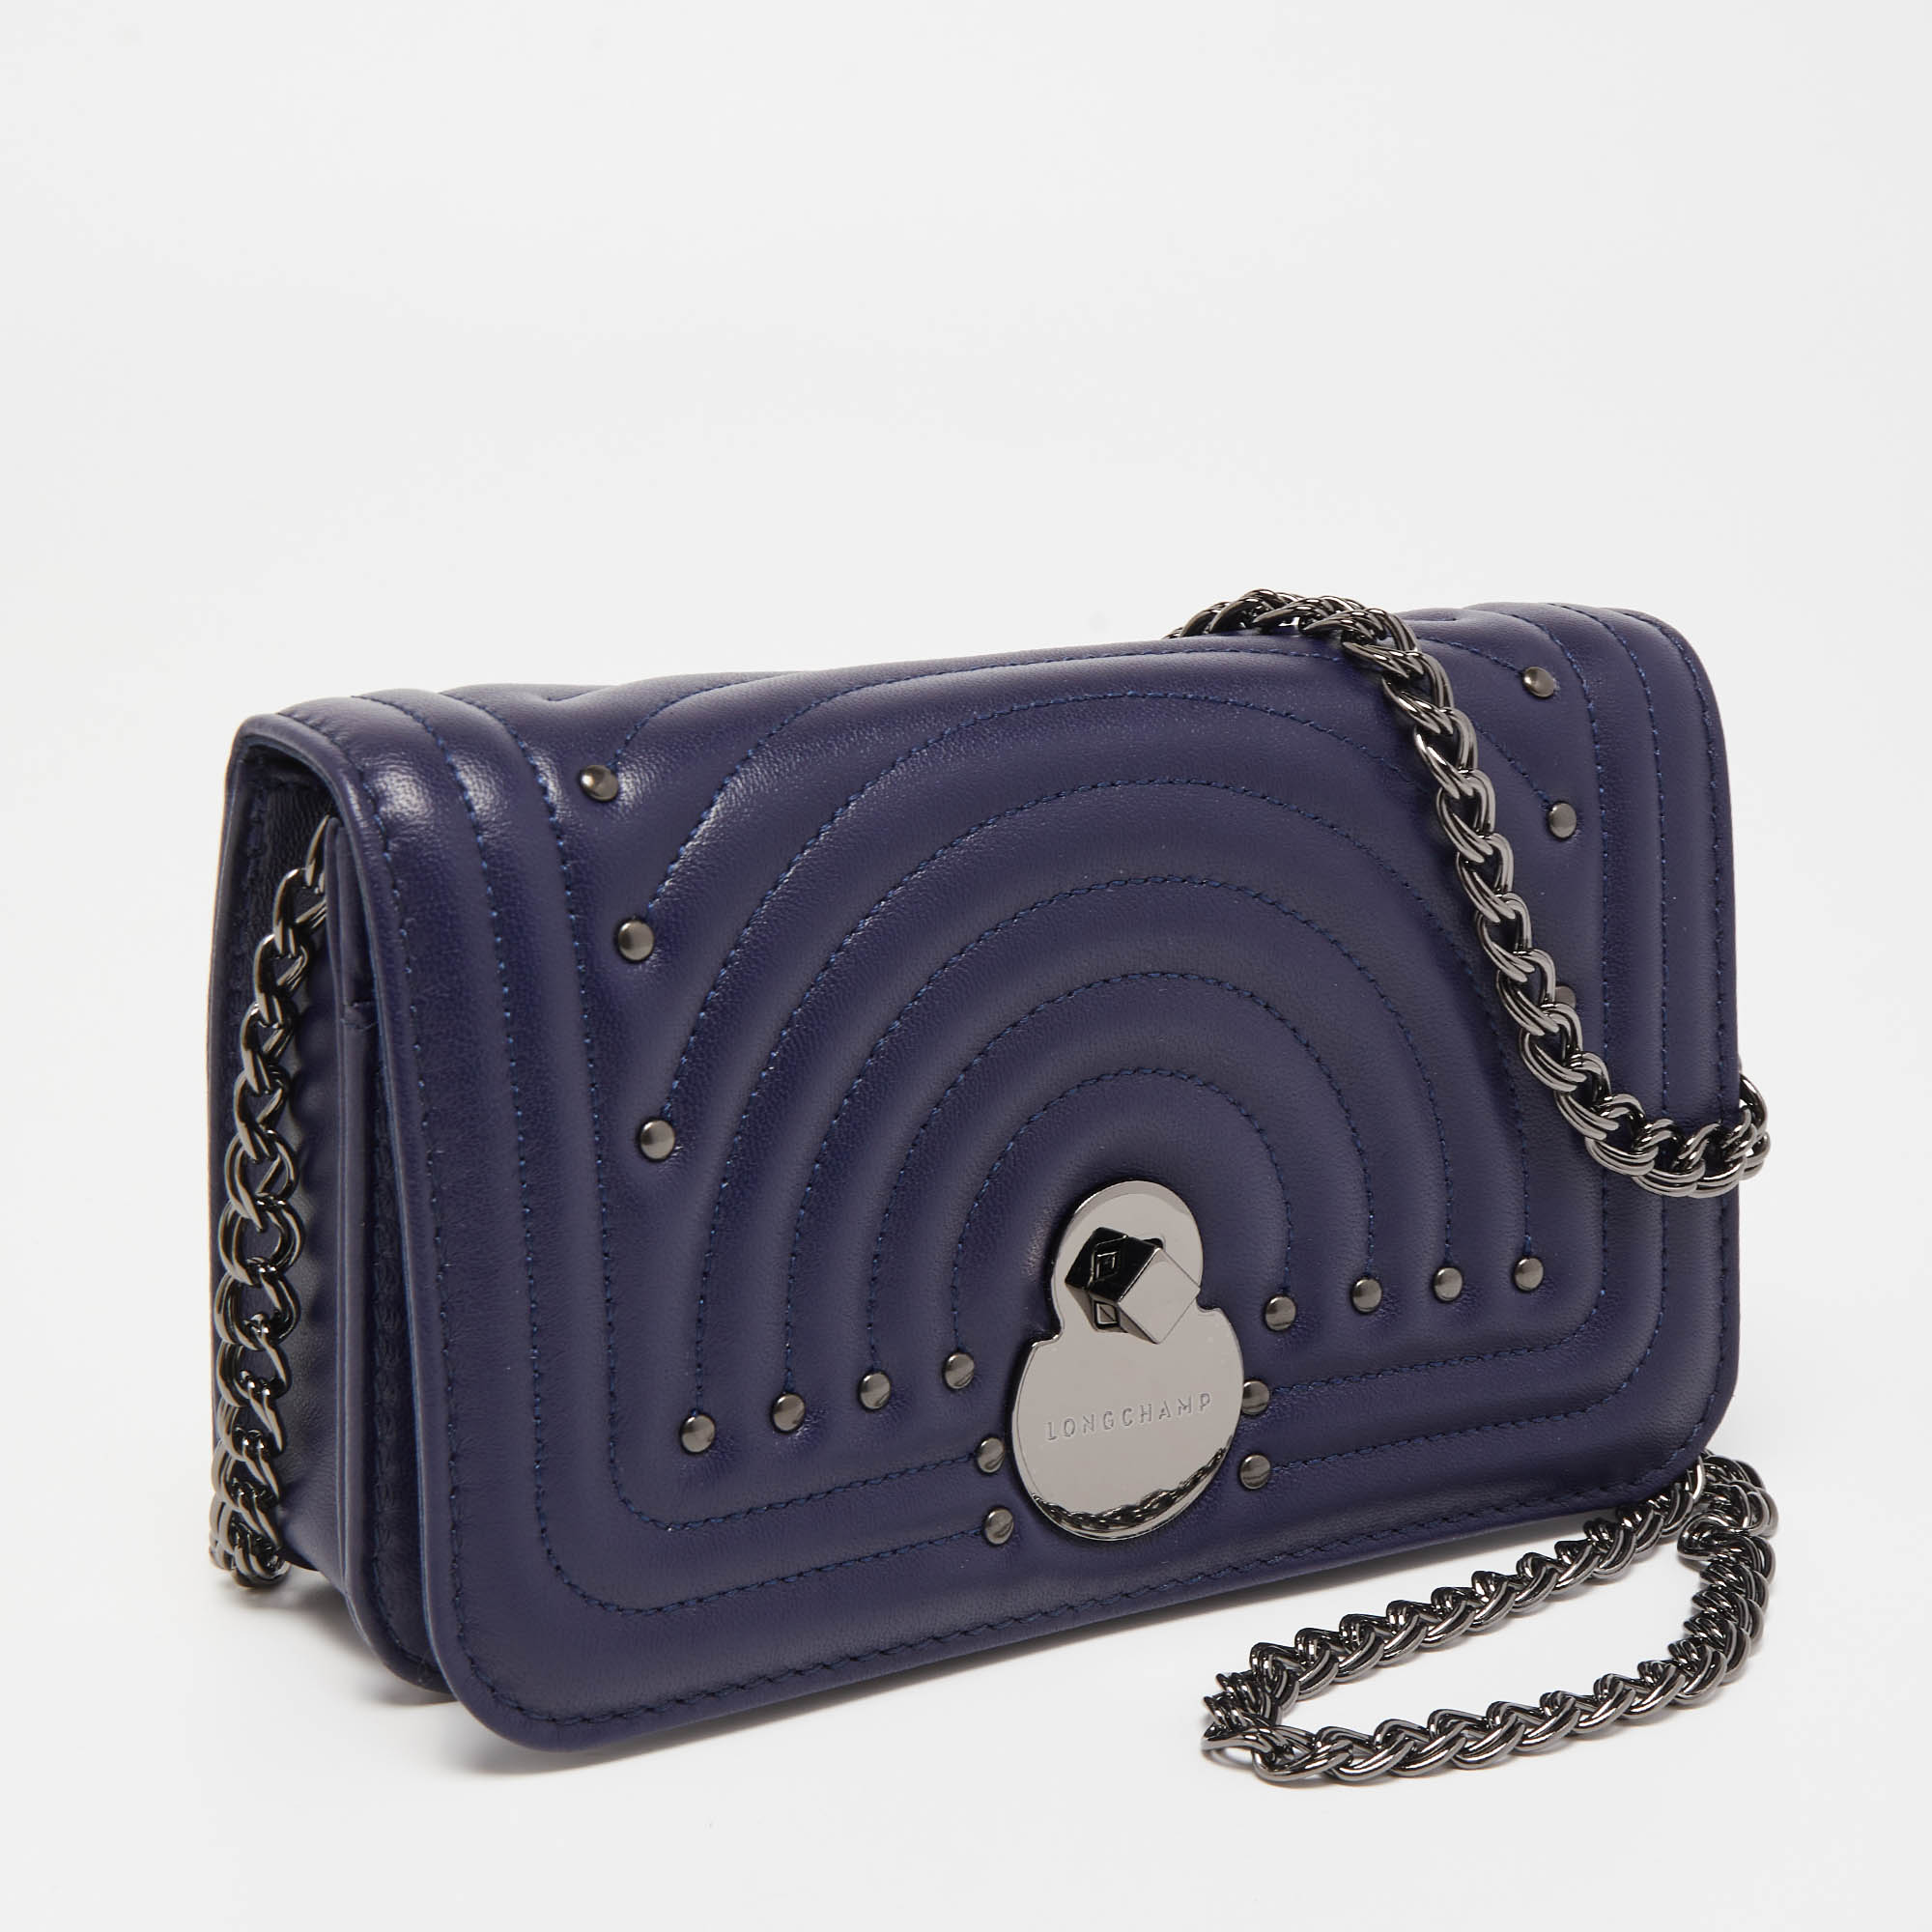 Longchamp Dark Blue Leather Studded Cavalcade Wallet On Chain